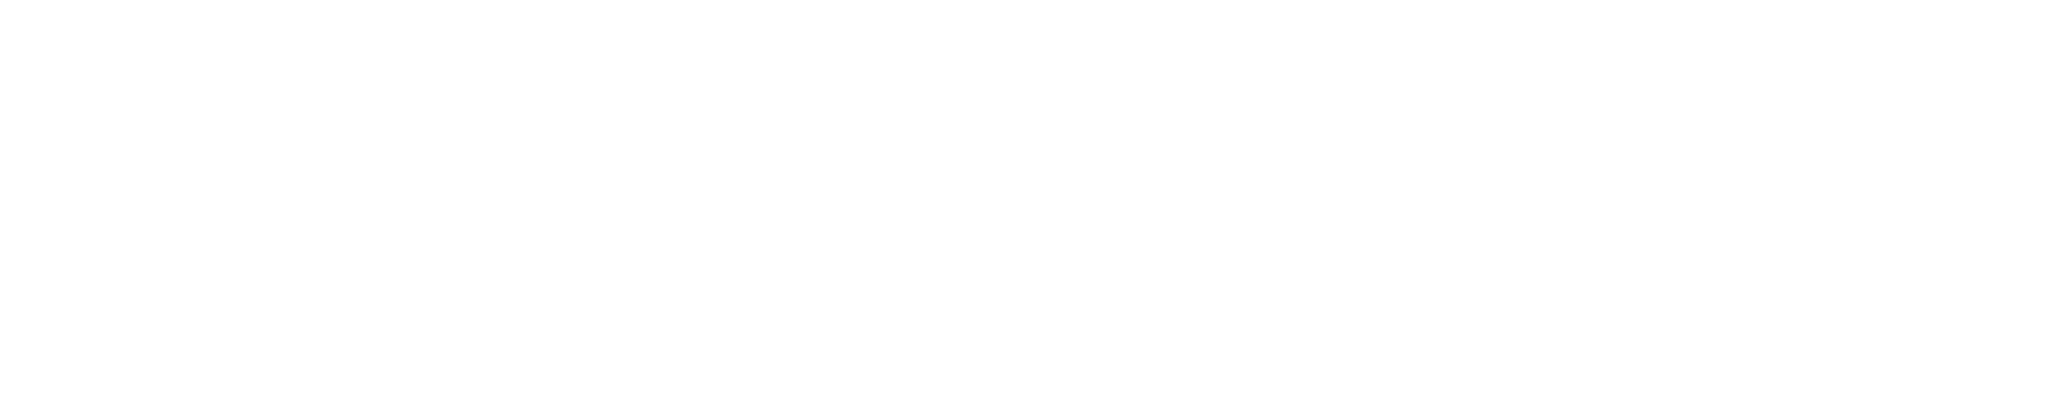 ma3-lab-logo-2@4x